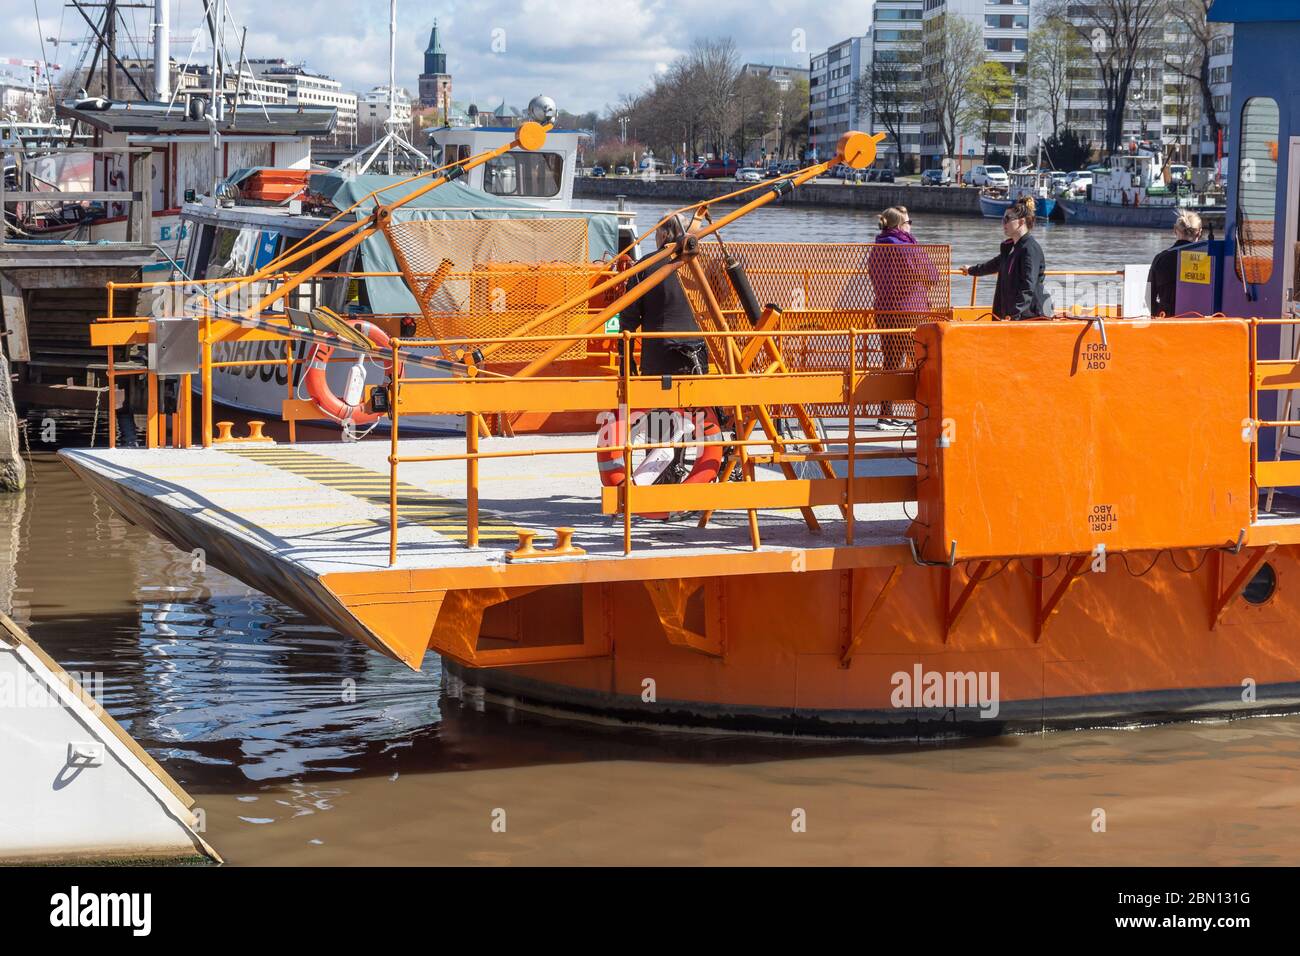 Föri is an yellow ferry across Aurajoki river in Turku Finland Stock Photo